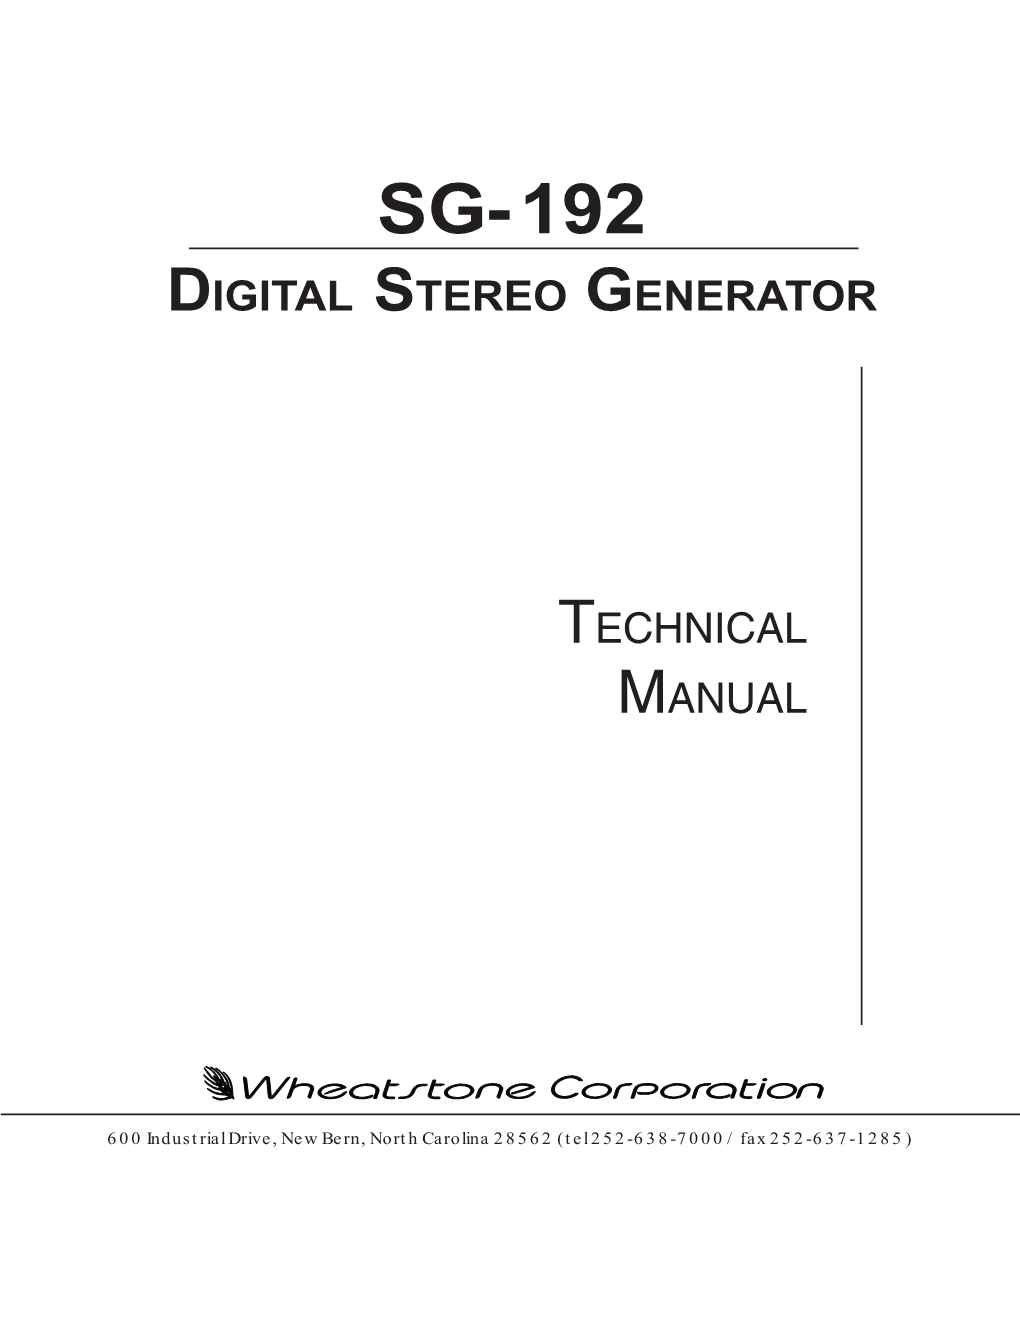 SG-192 Digital Stereo Generator